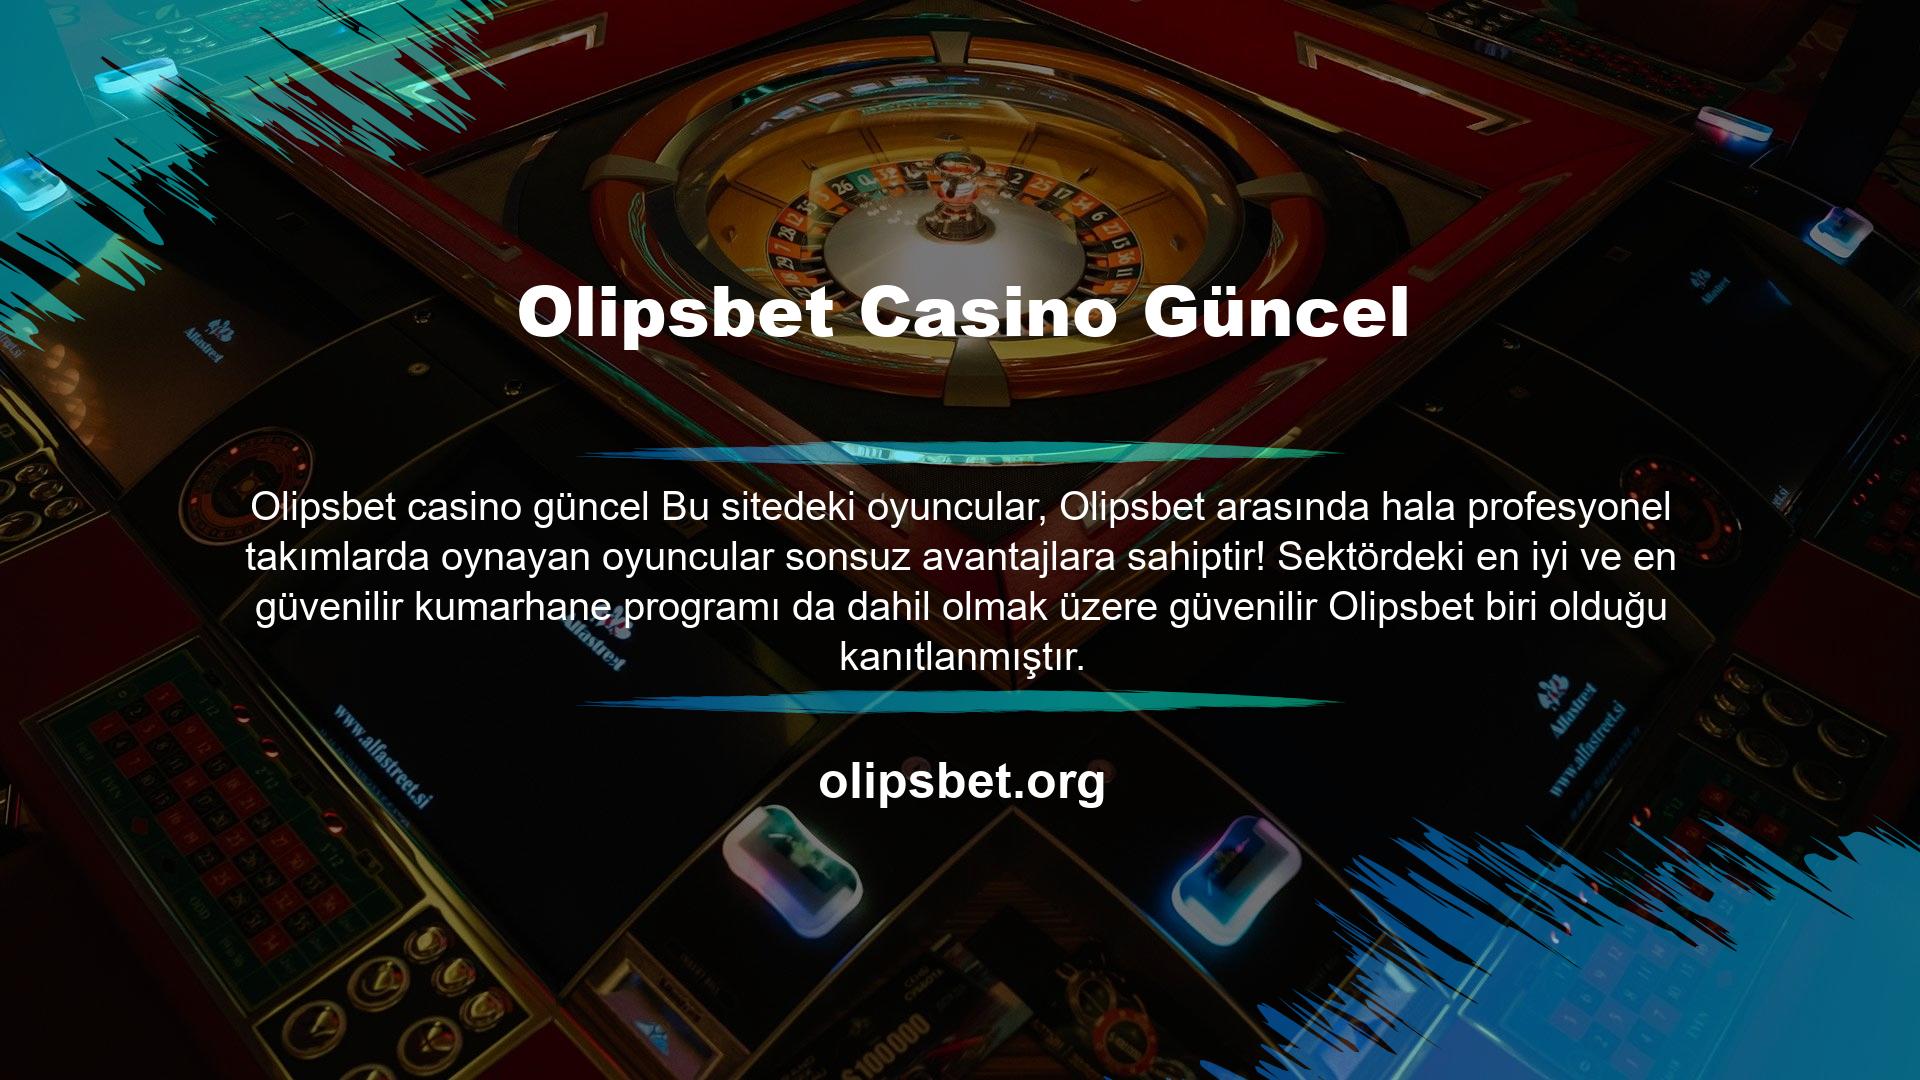 Olipsbet Casino Güncel